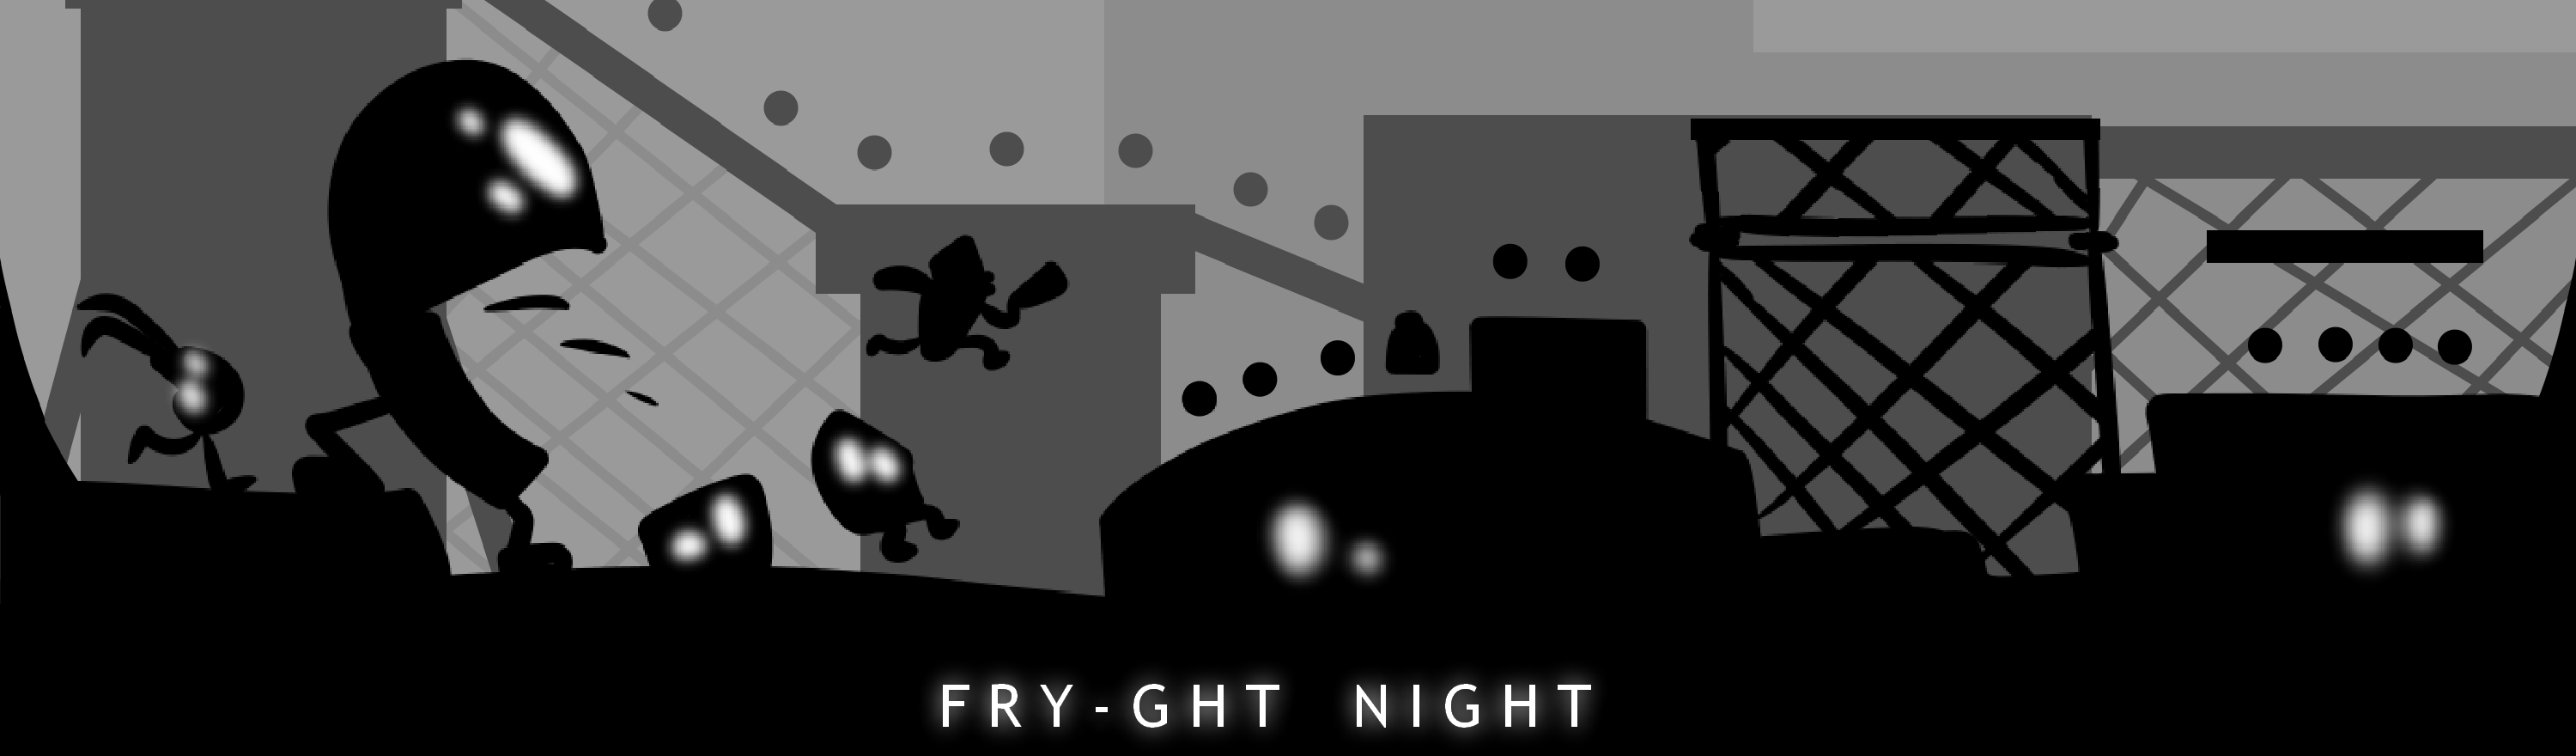 Fry-ght Night